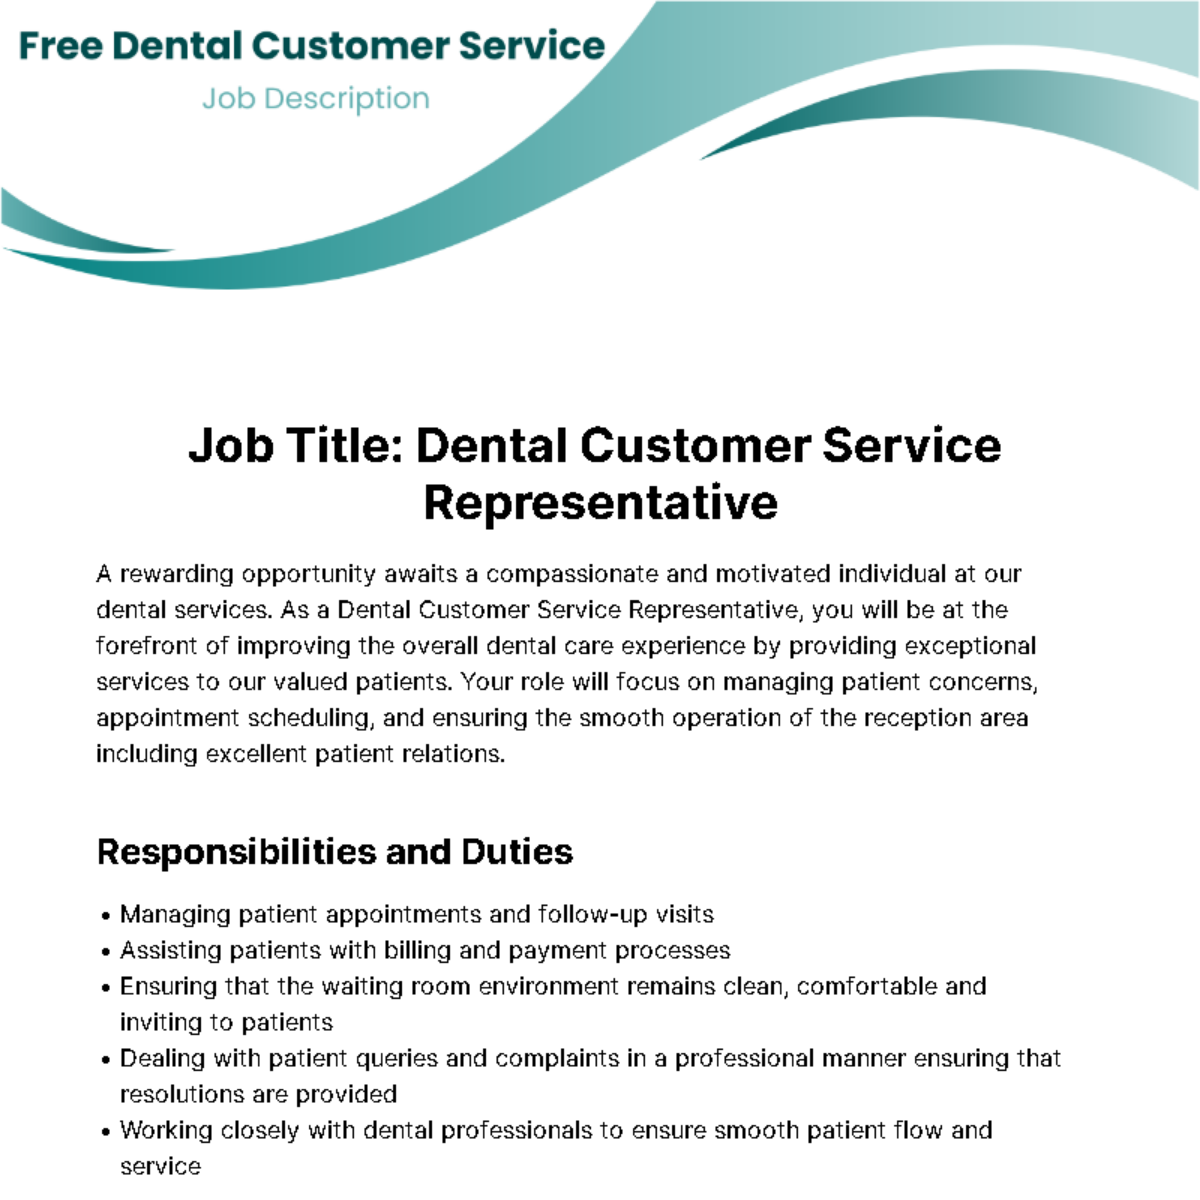 Free Dental Customer Service Job Description Template